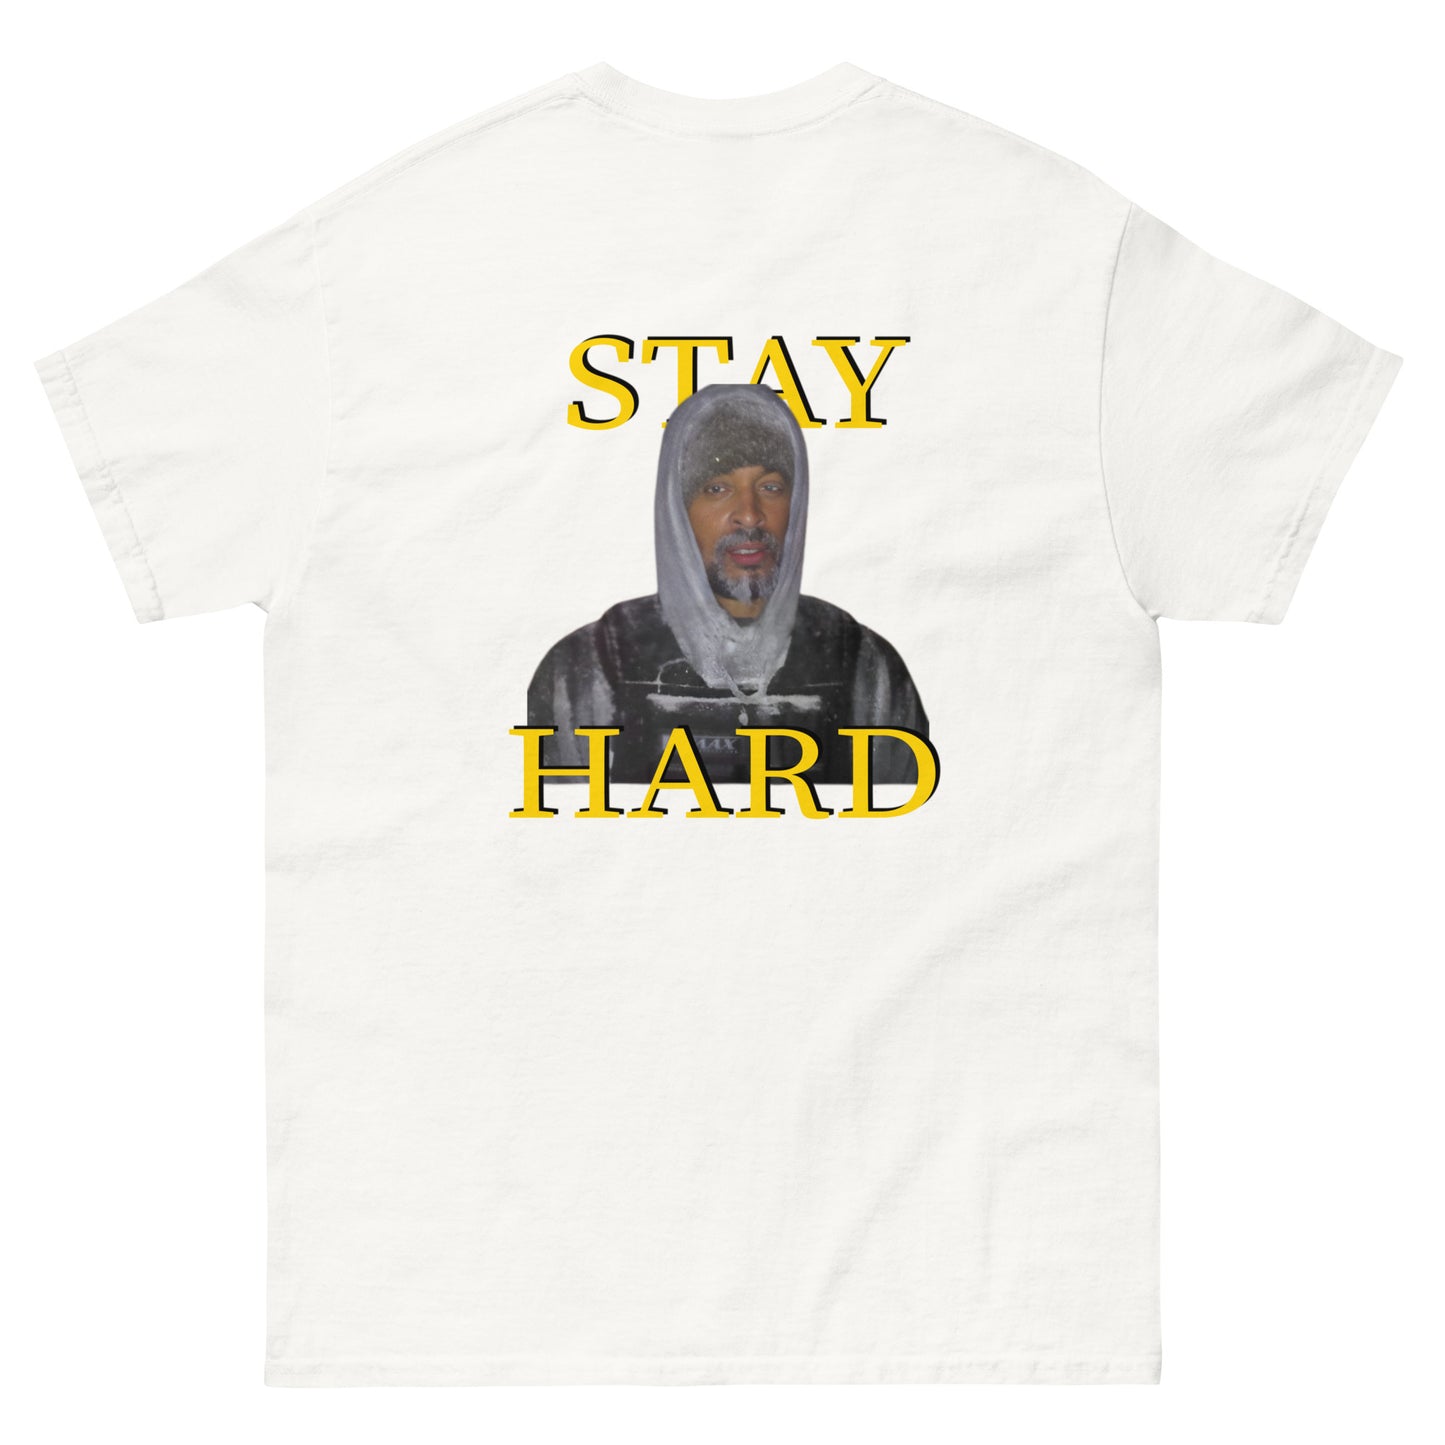 „Stay hard“ – klassisches T-Shirt